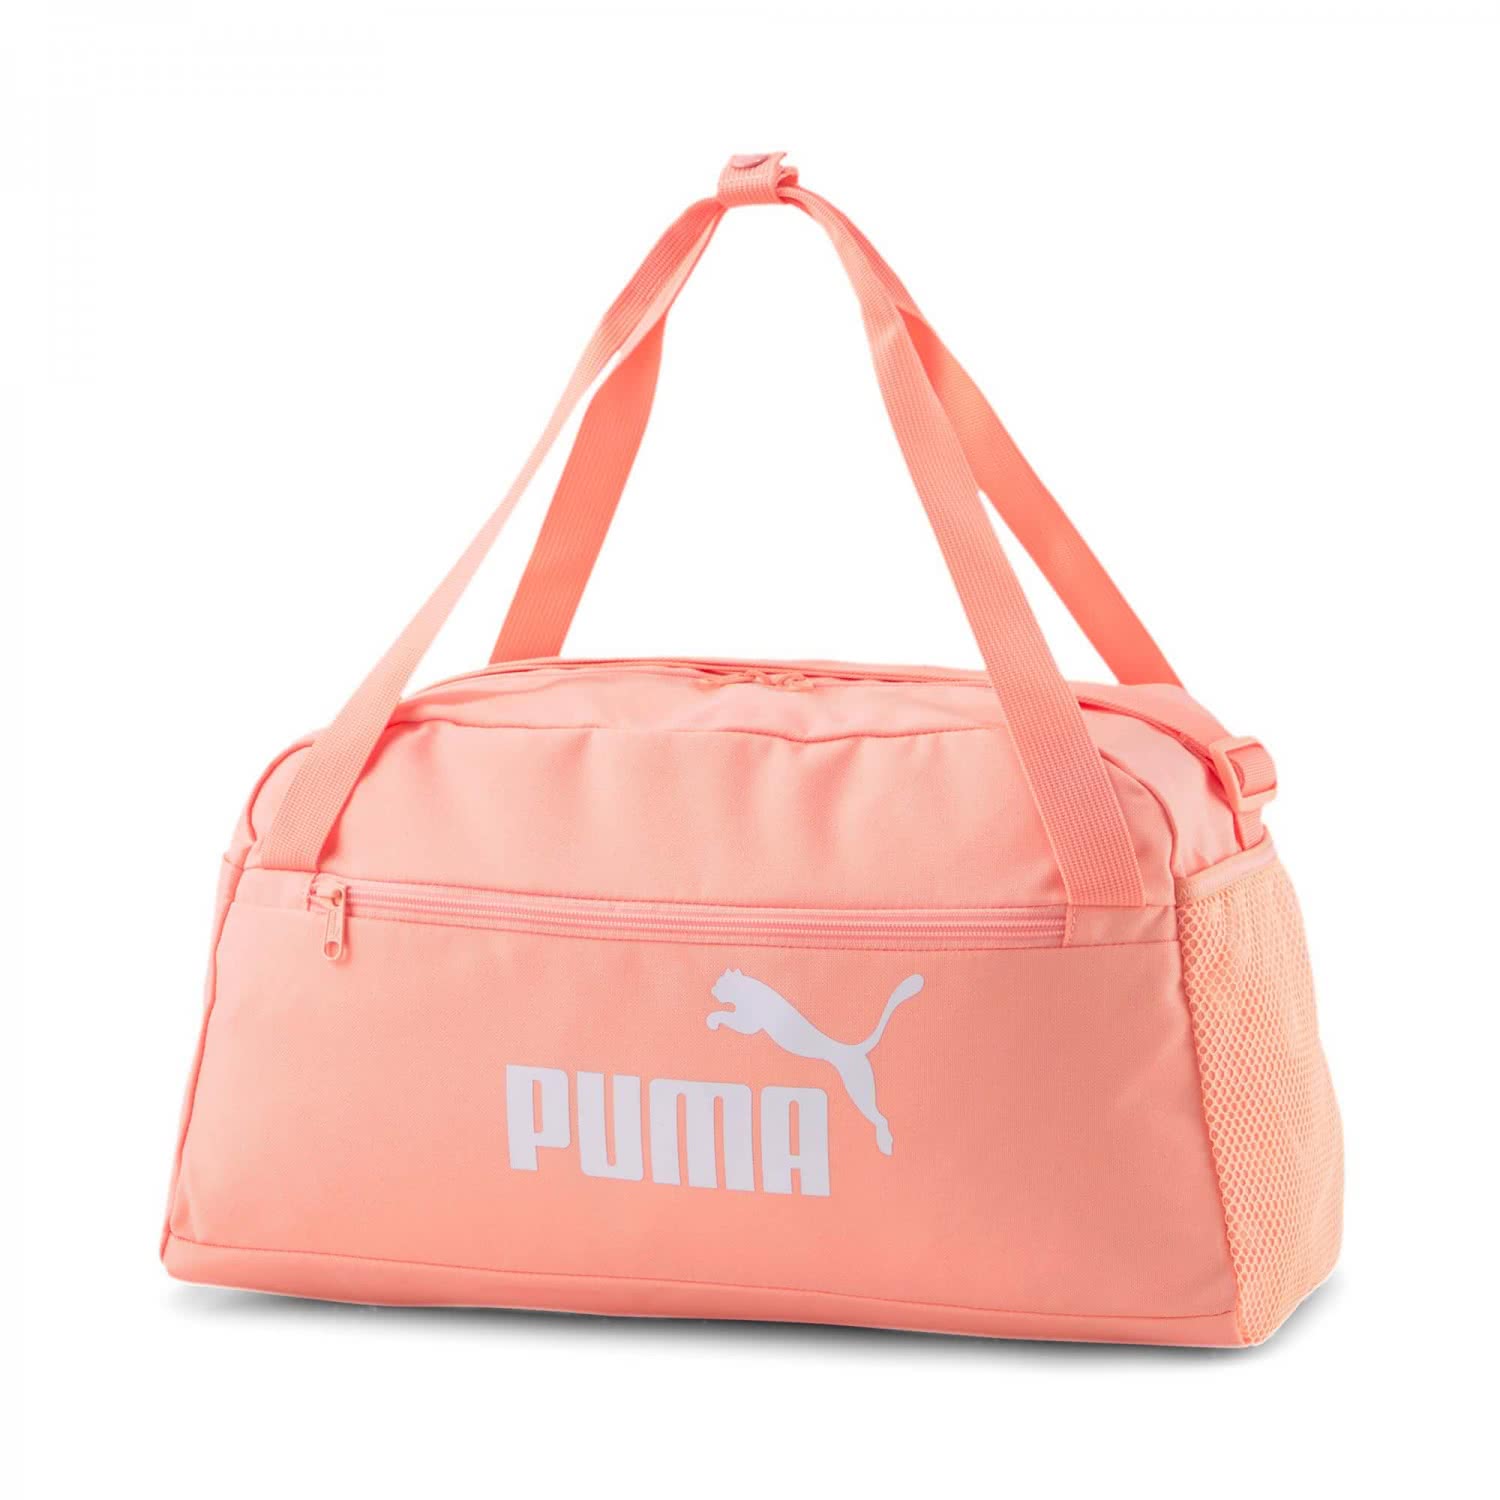 Puma Sporttasche Phase Sports Bag 078033 | Sporttaschen